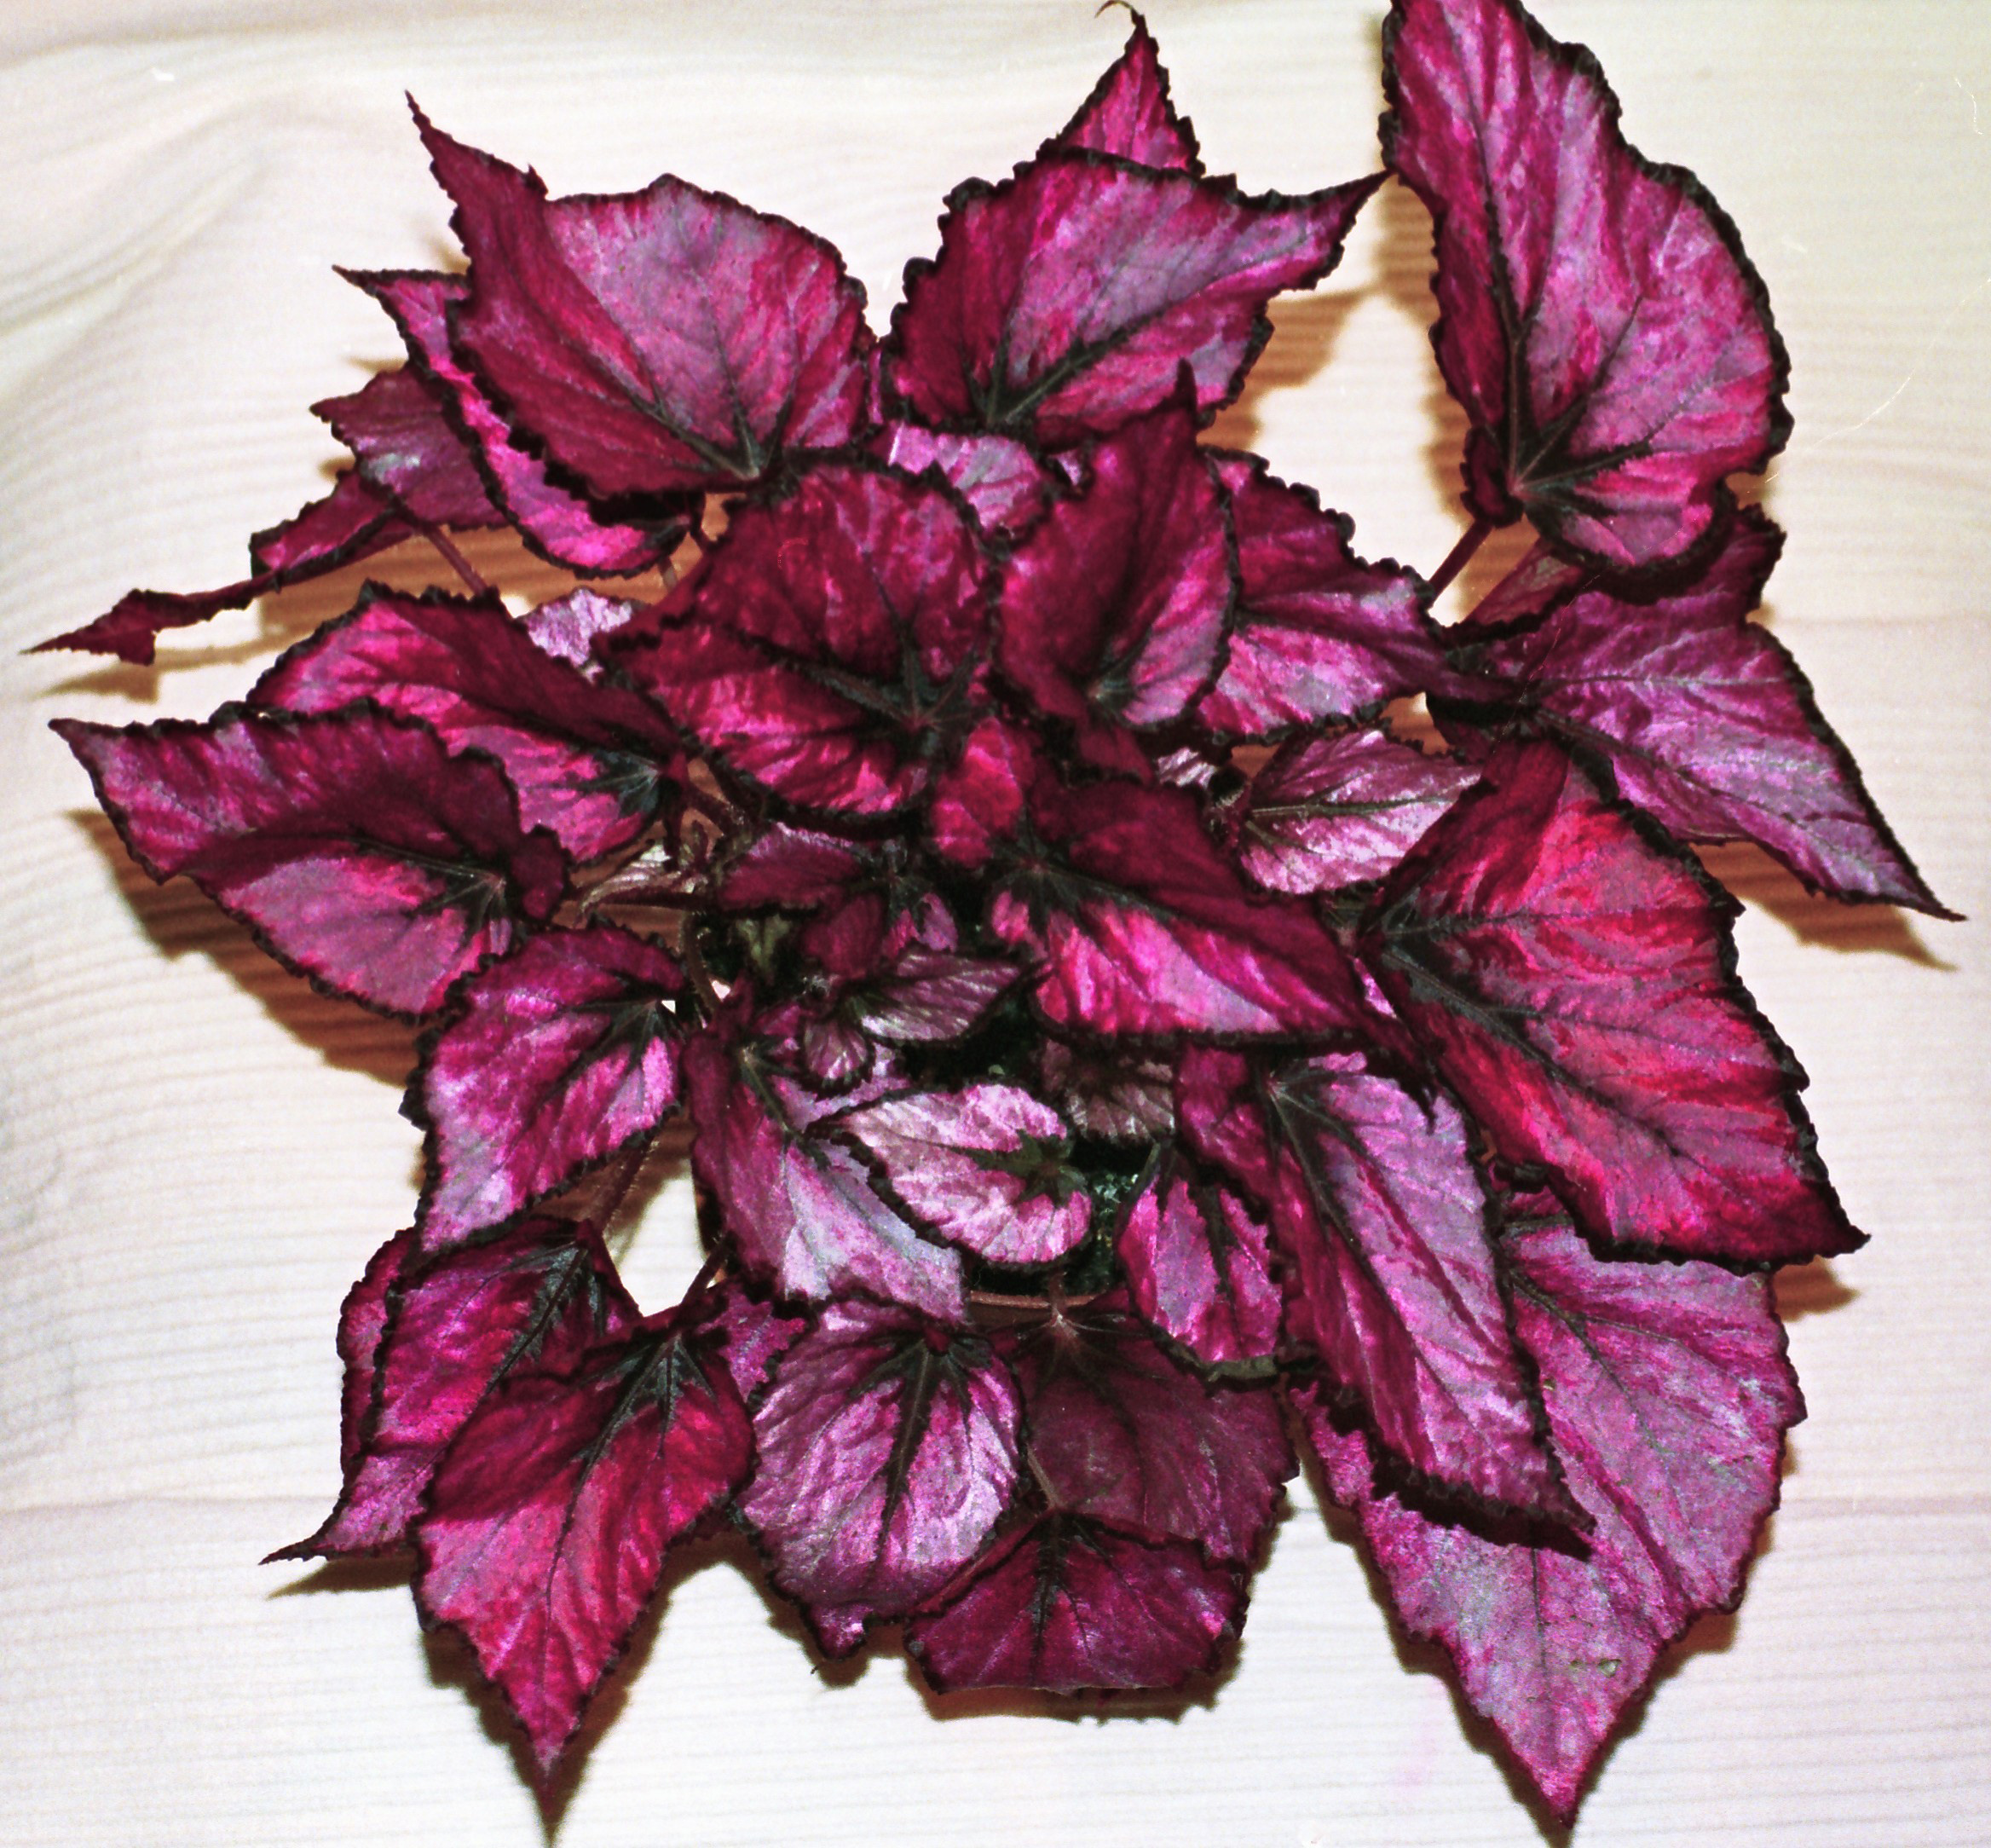 File:Begonia hybr. 'Regal'.jpg - Wikimedia Commons